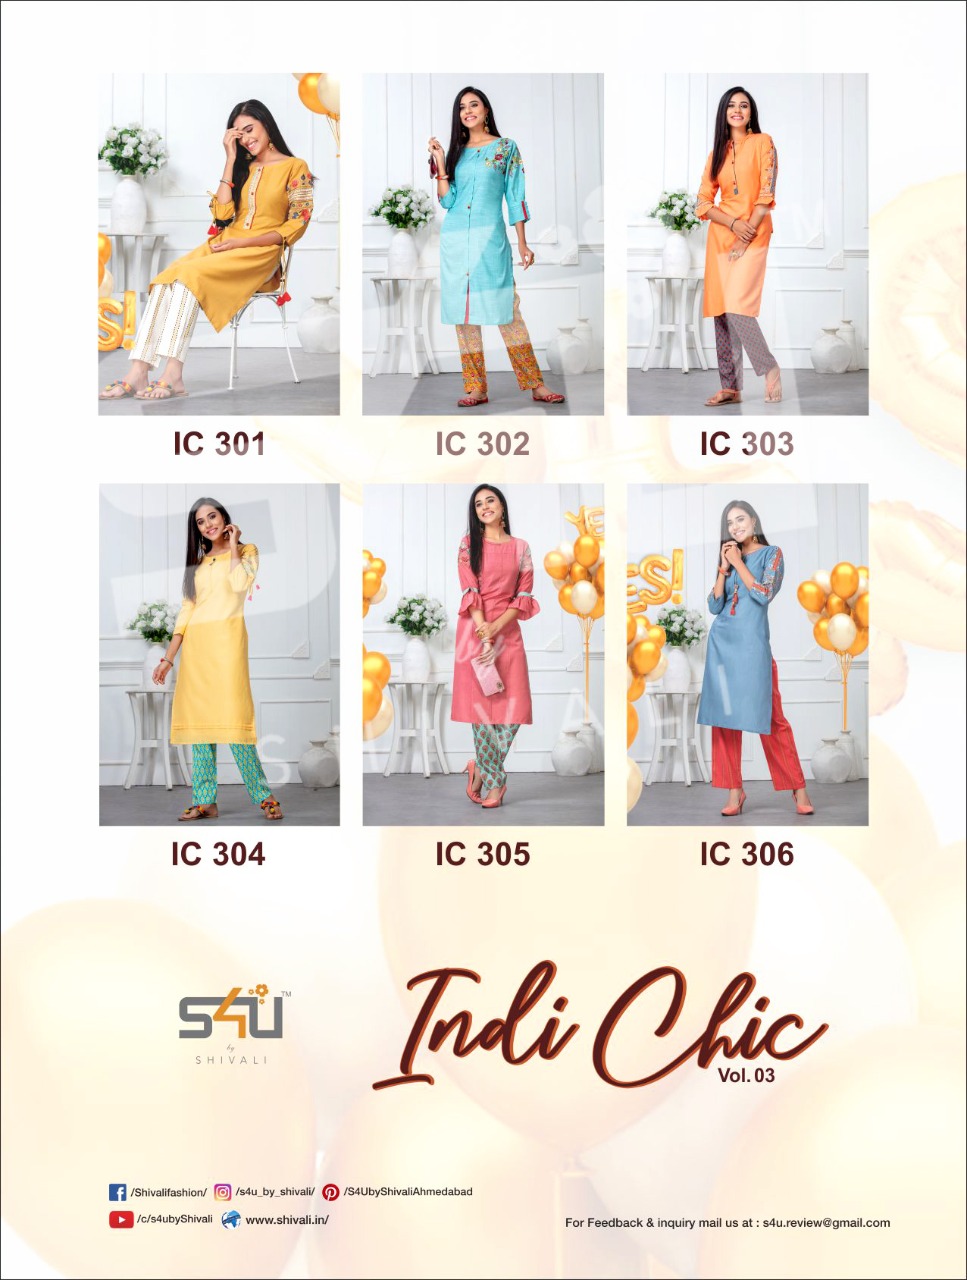 S4U Indi Chic 301-306